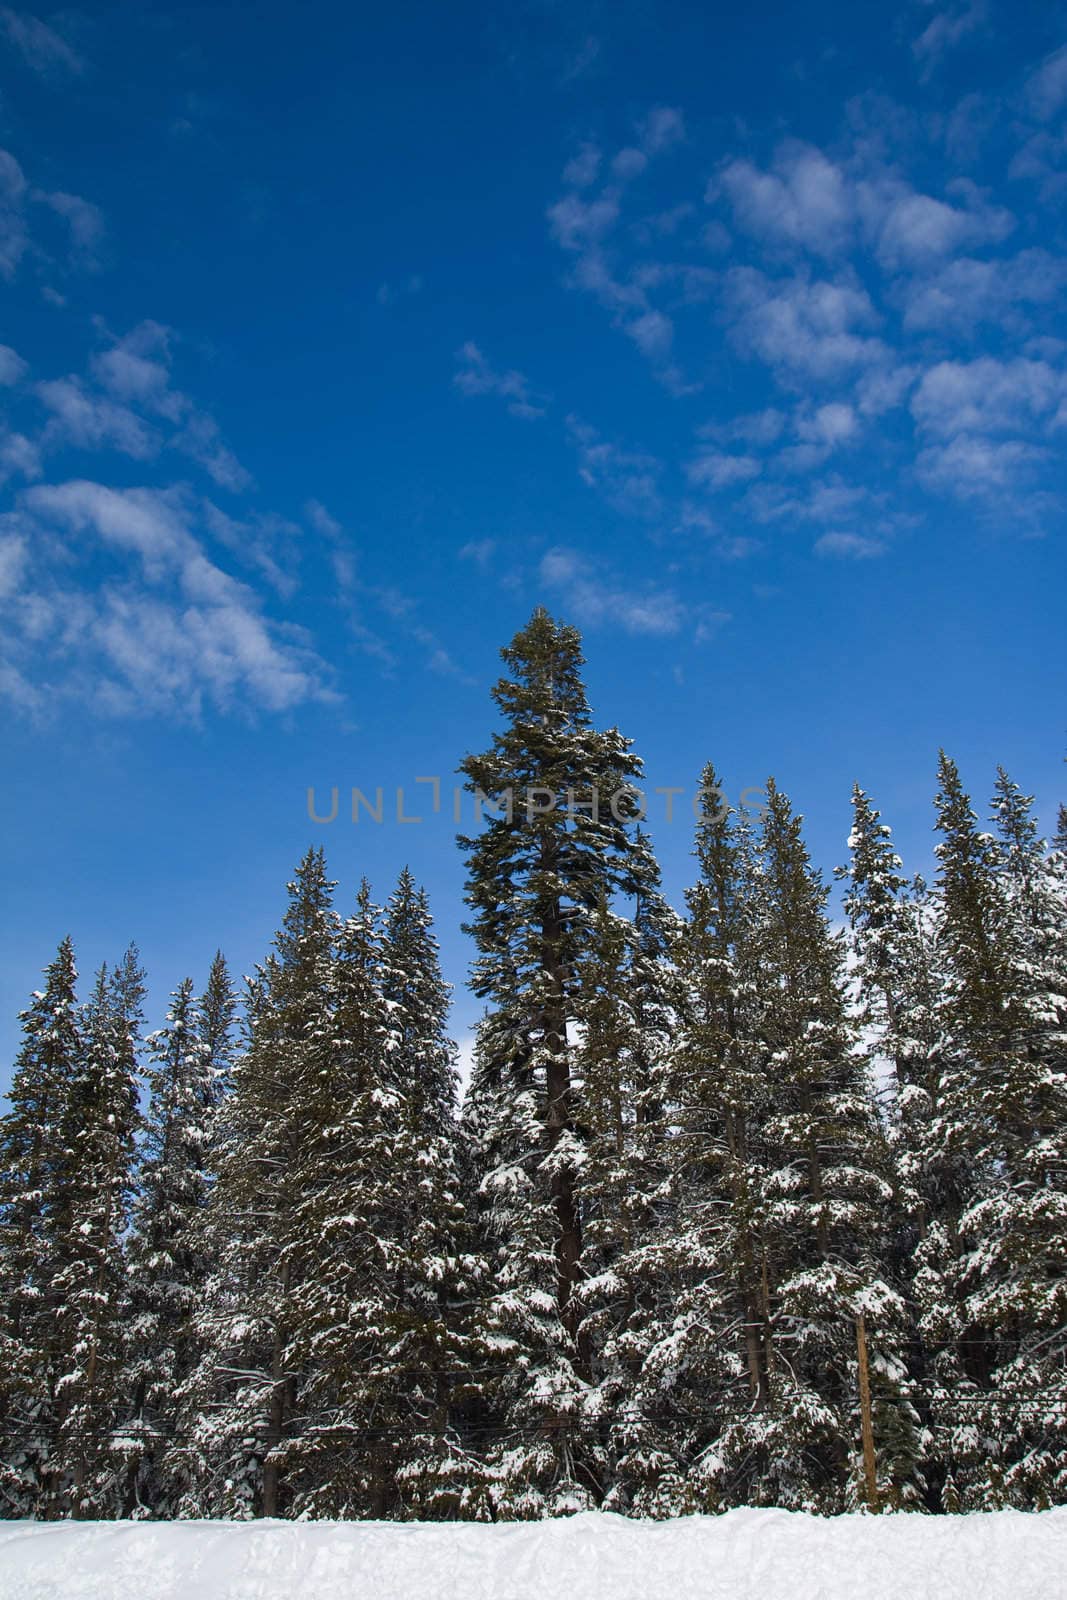 Pine trees in winter landscape at Lake Tahoe, California